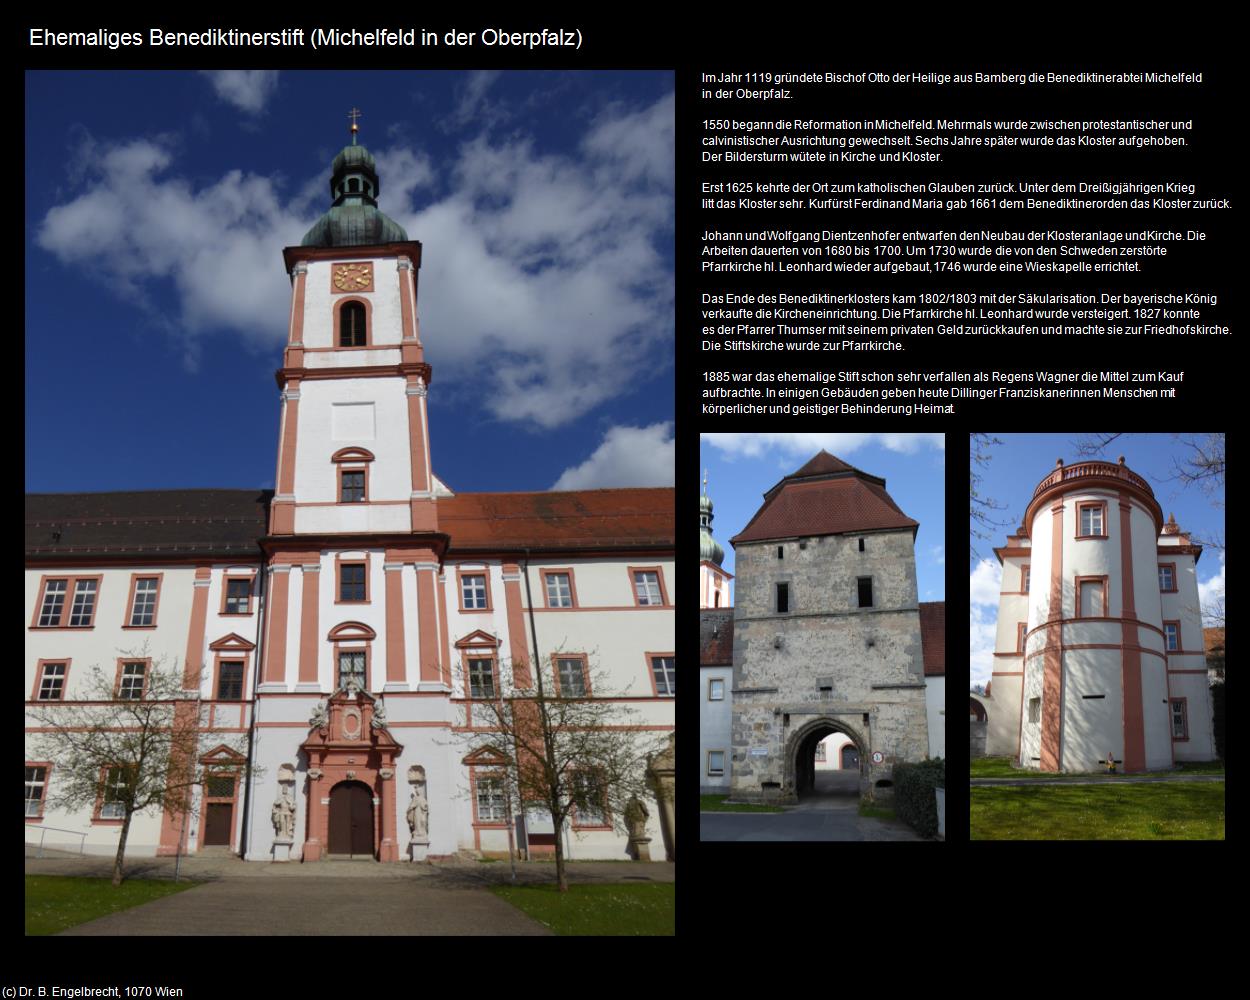 Ehem. Benediktinerstift (Michelfeld in der Oberpfalz) in Kulturatlas-BAYERN